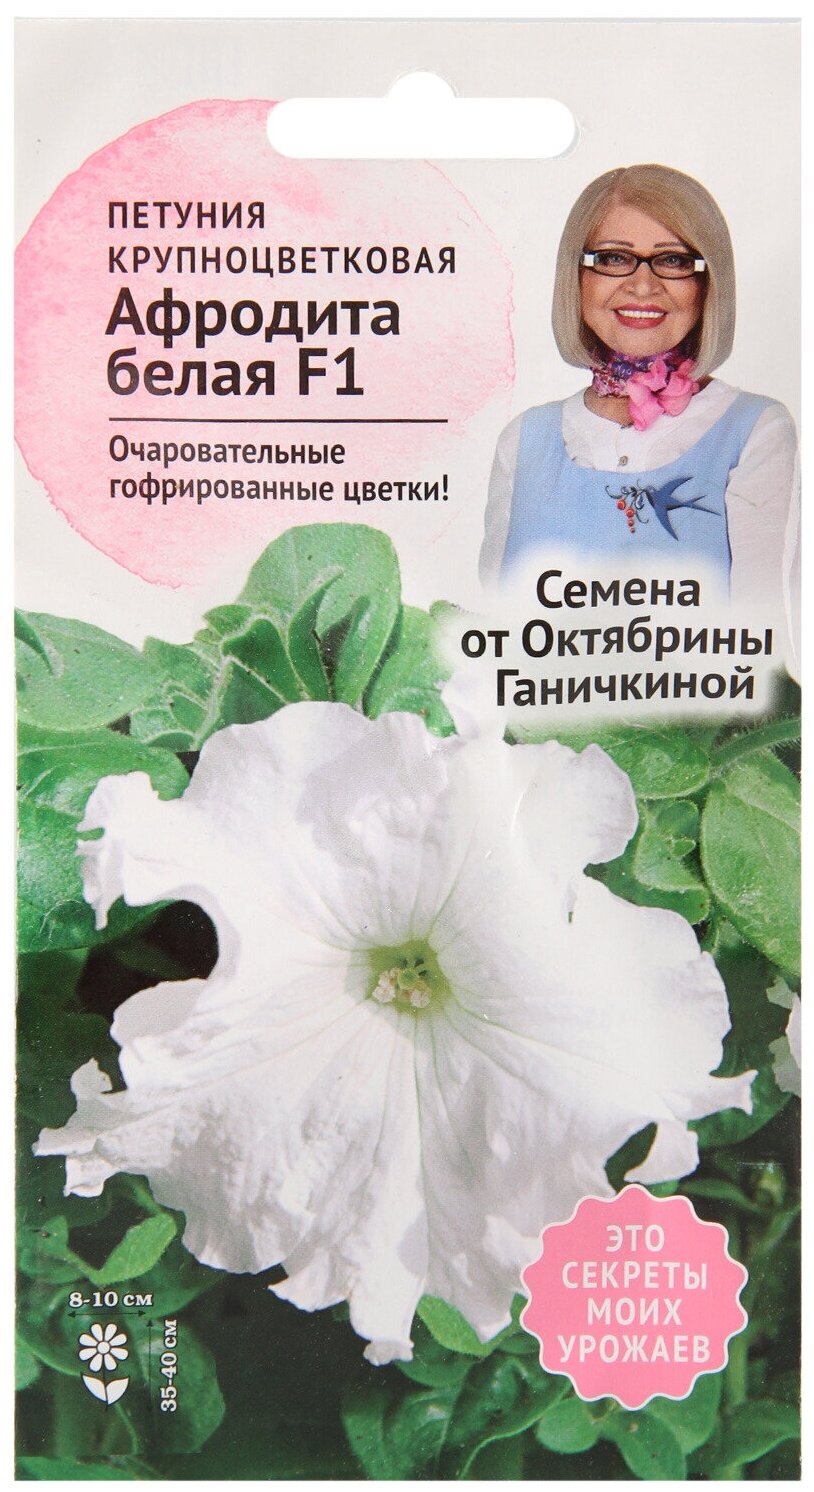 Петуния Афродита белая F1 10 шт / семена однолетних цветов для сада / однолетние цветы для балкона в грунт / для сада дачи дома /